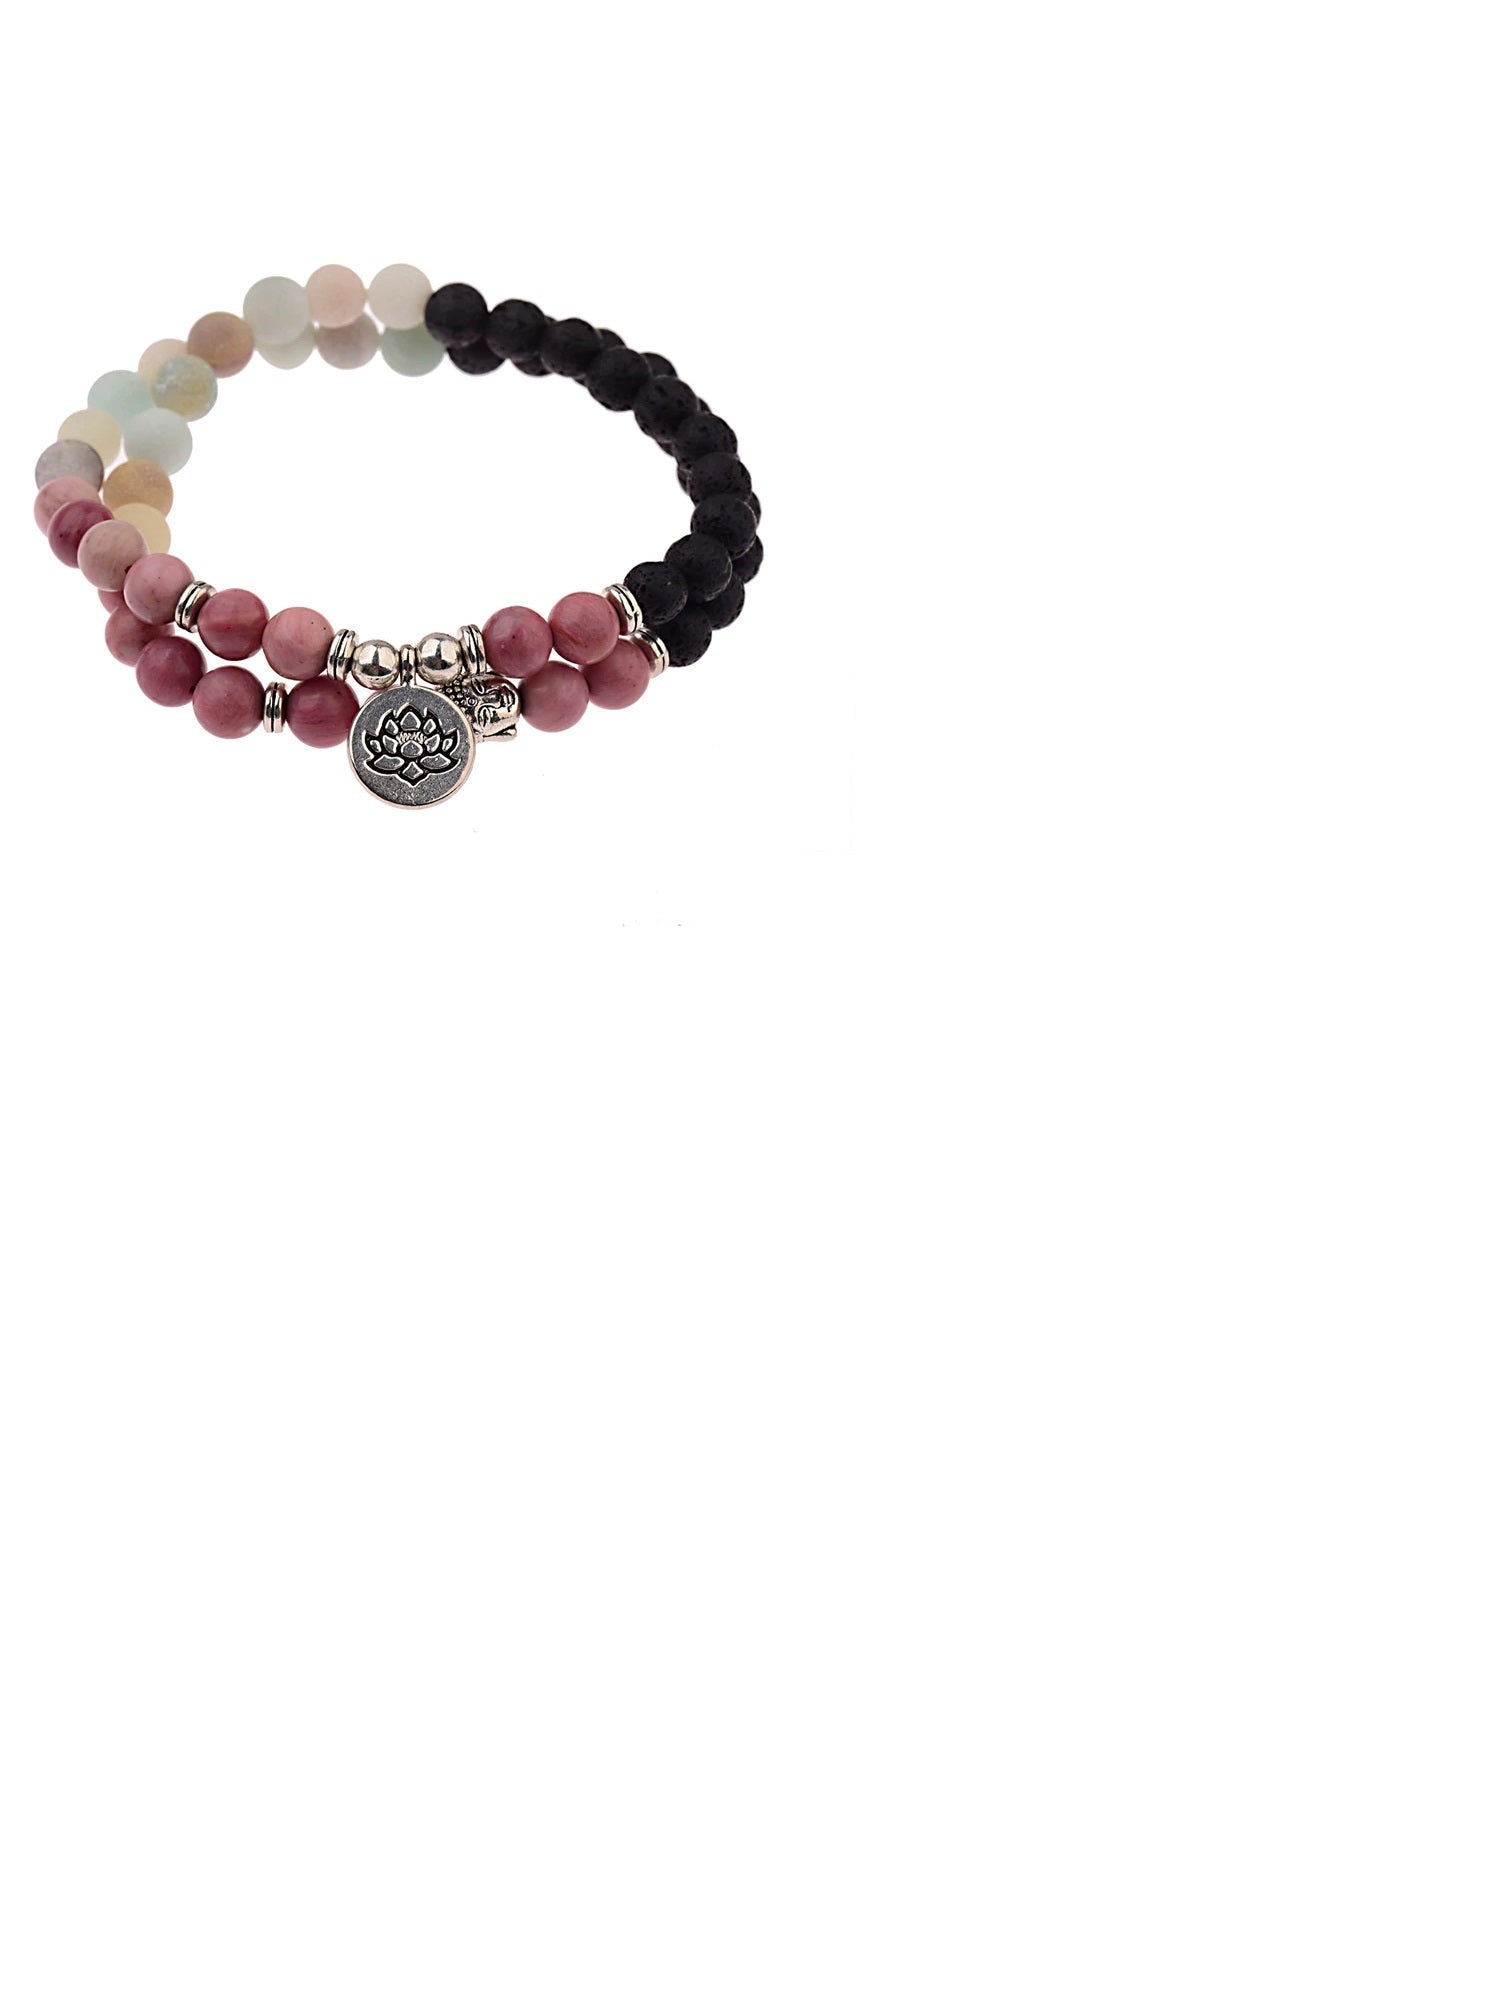 7 Chakra Stone Bracelets for Women Men Buddha Bless Healing Balance Beads  Reiki Buddha Prayer Leather